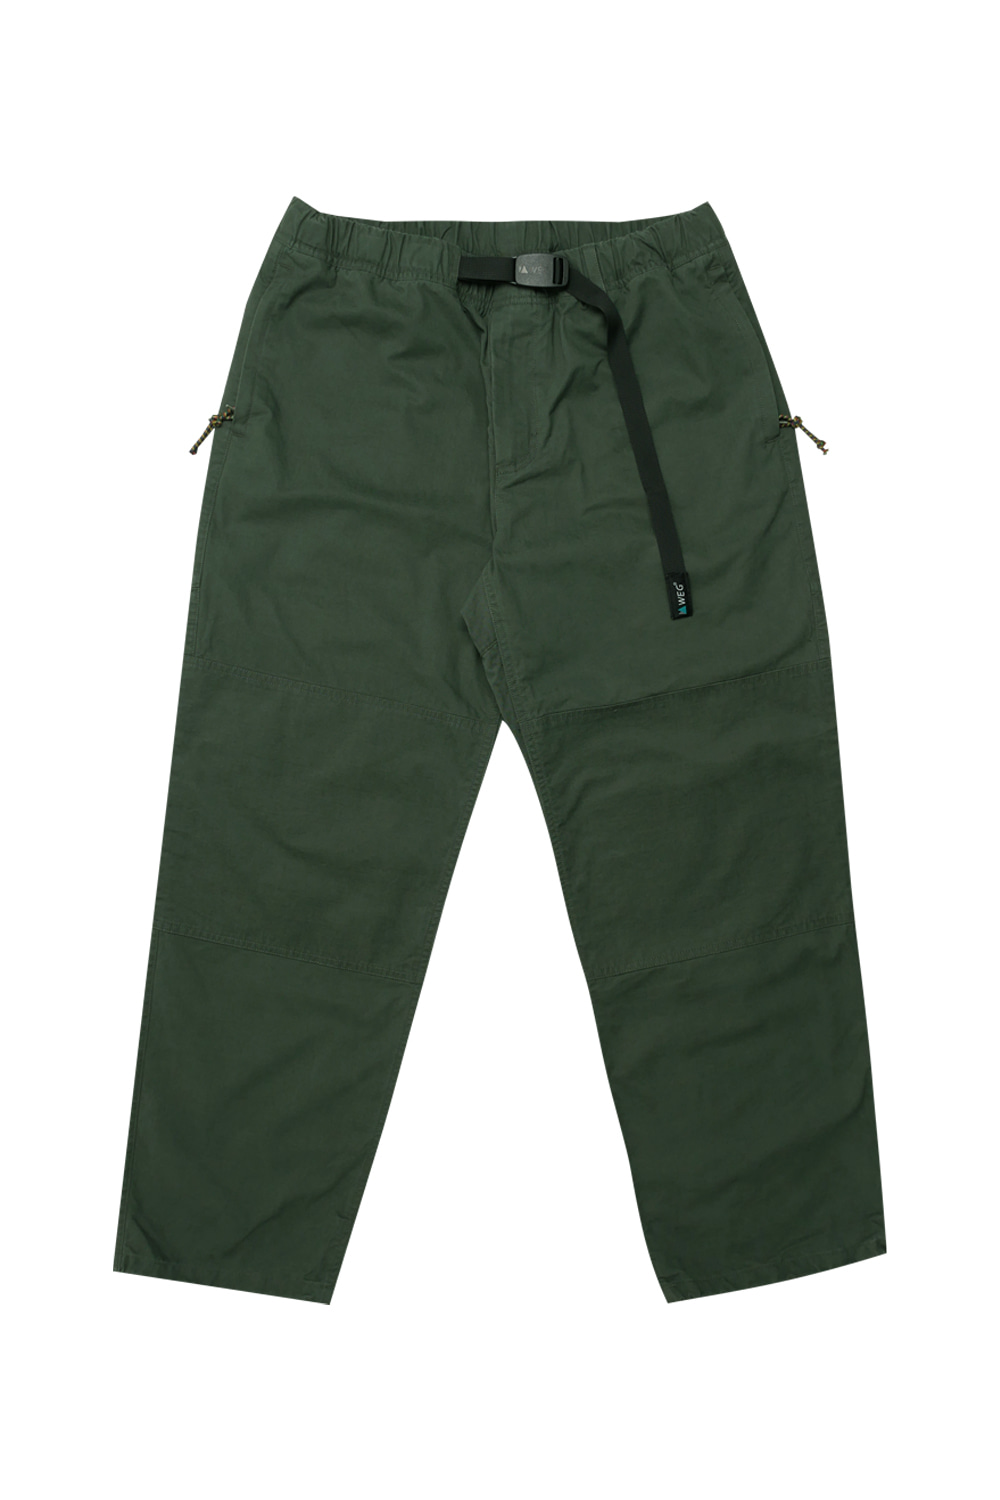 Banff Warm Cotton Beltpants (British Green)